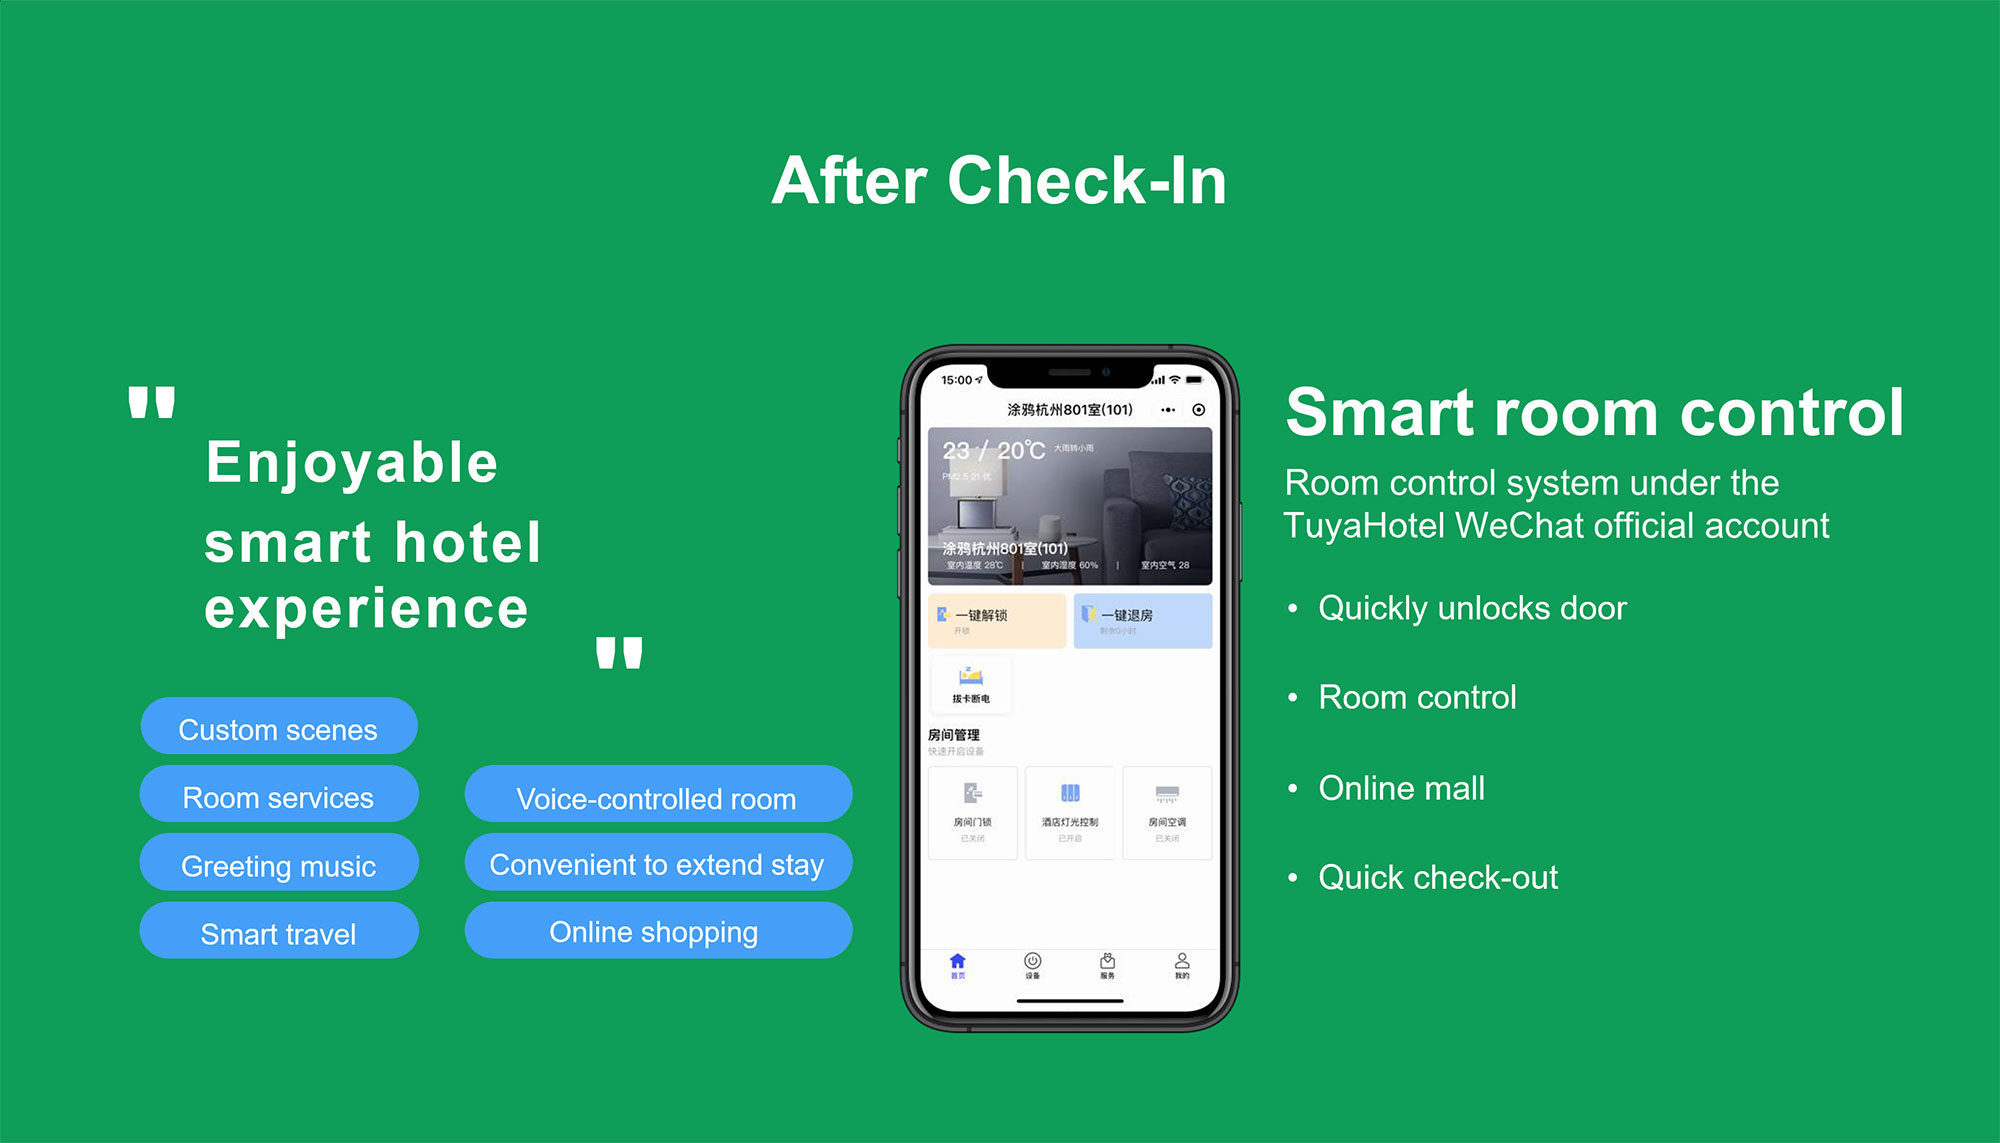 Smart Hotel